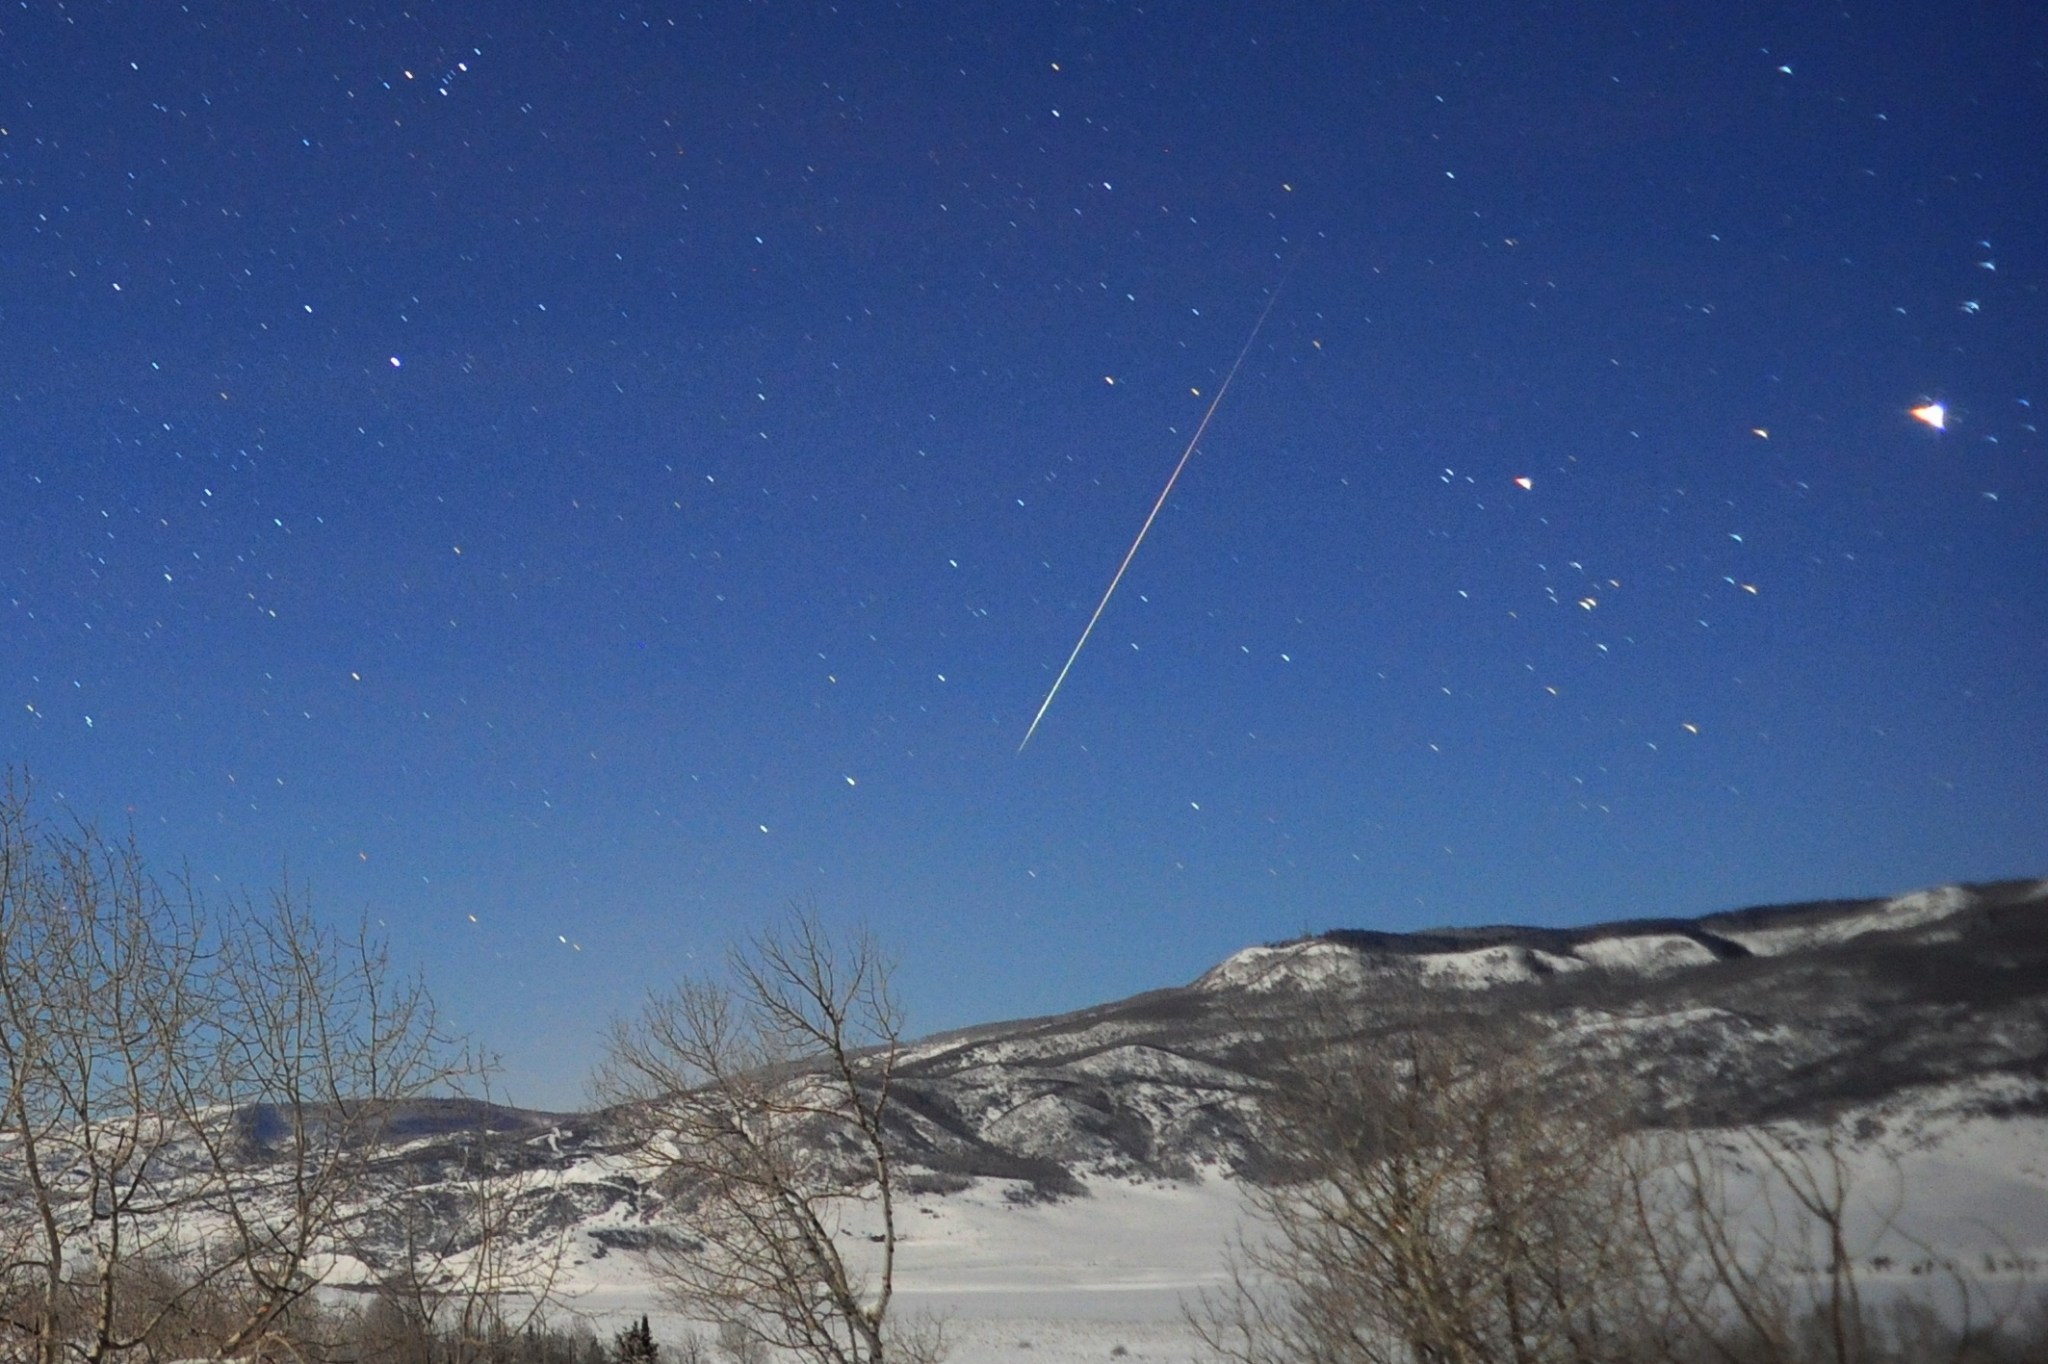 A meteor streaks across a blue sky above a rugged, snowy landscape